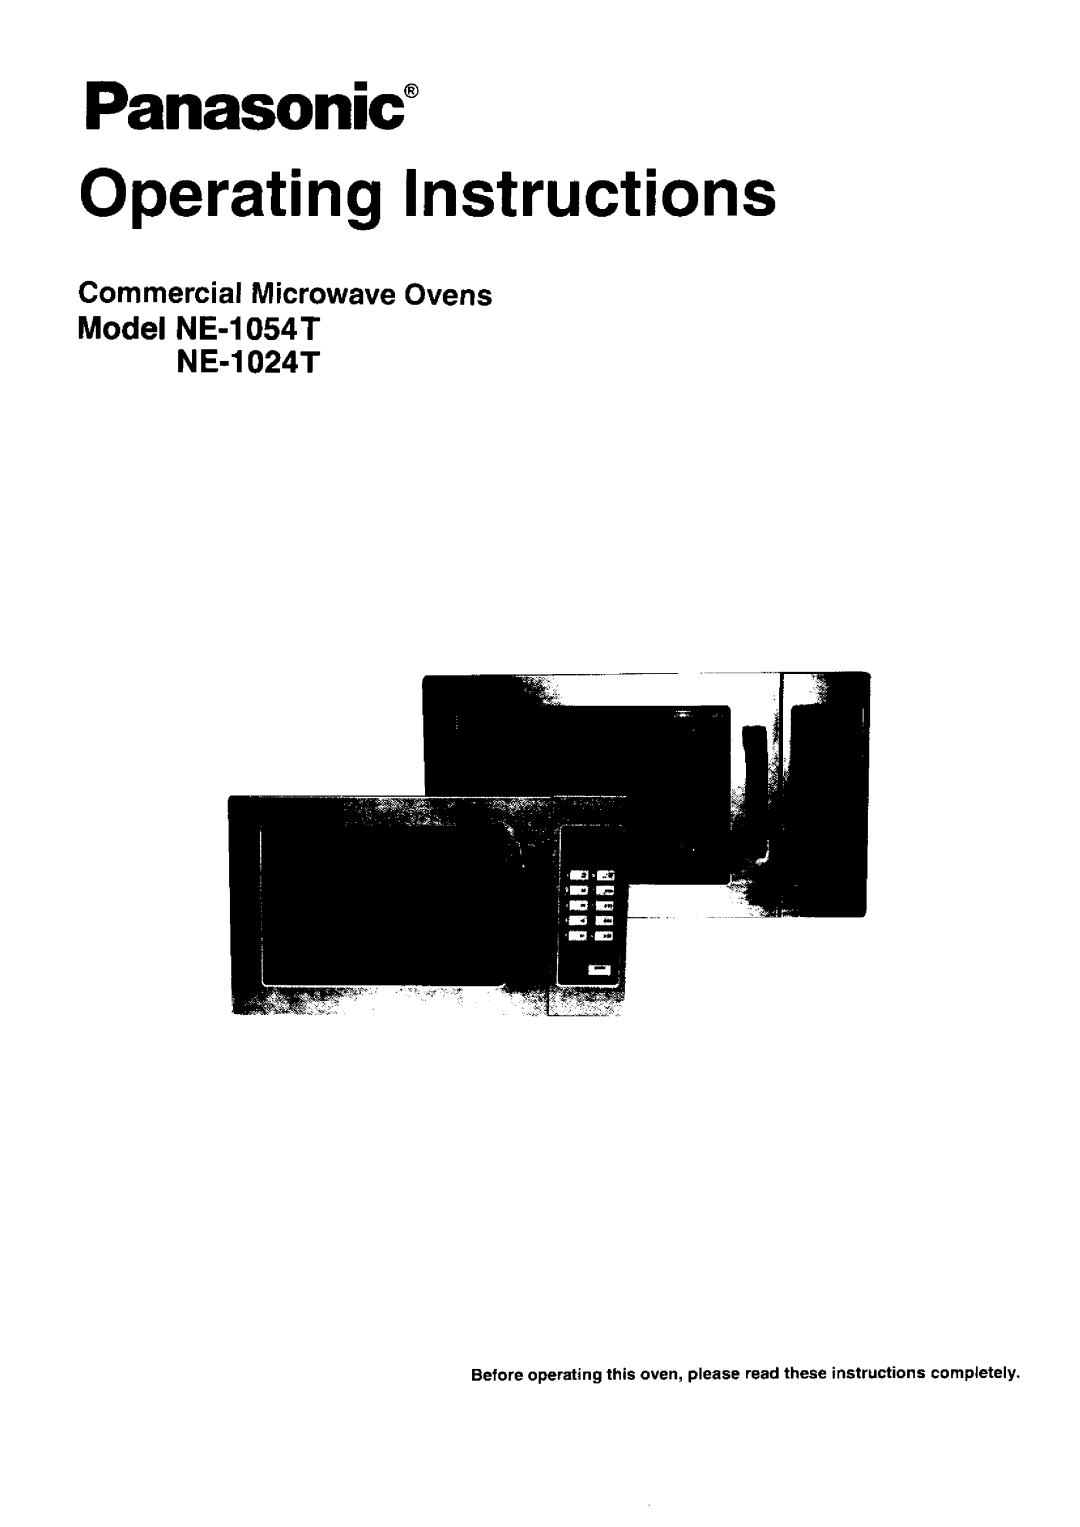 Panasonic manual Operating Instructions, CommercialMicrowaveOvens ModelNE-l0547 NE-l0247, Panasonic 